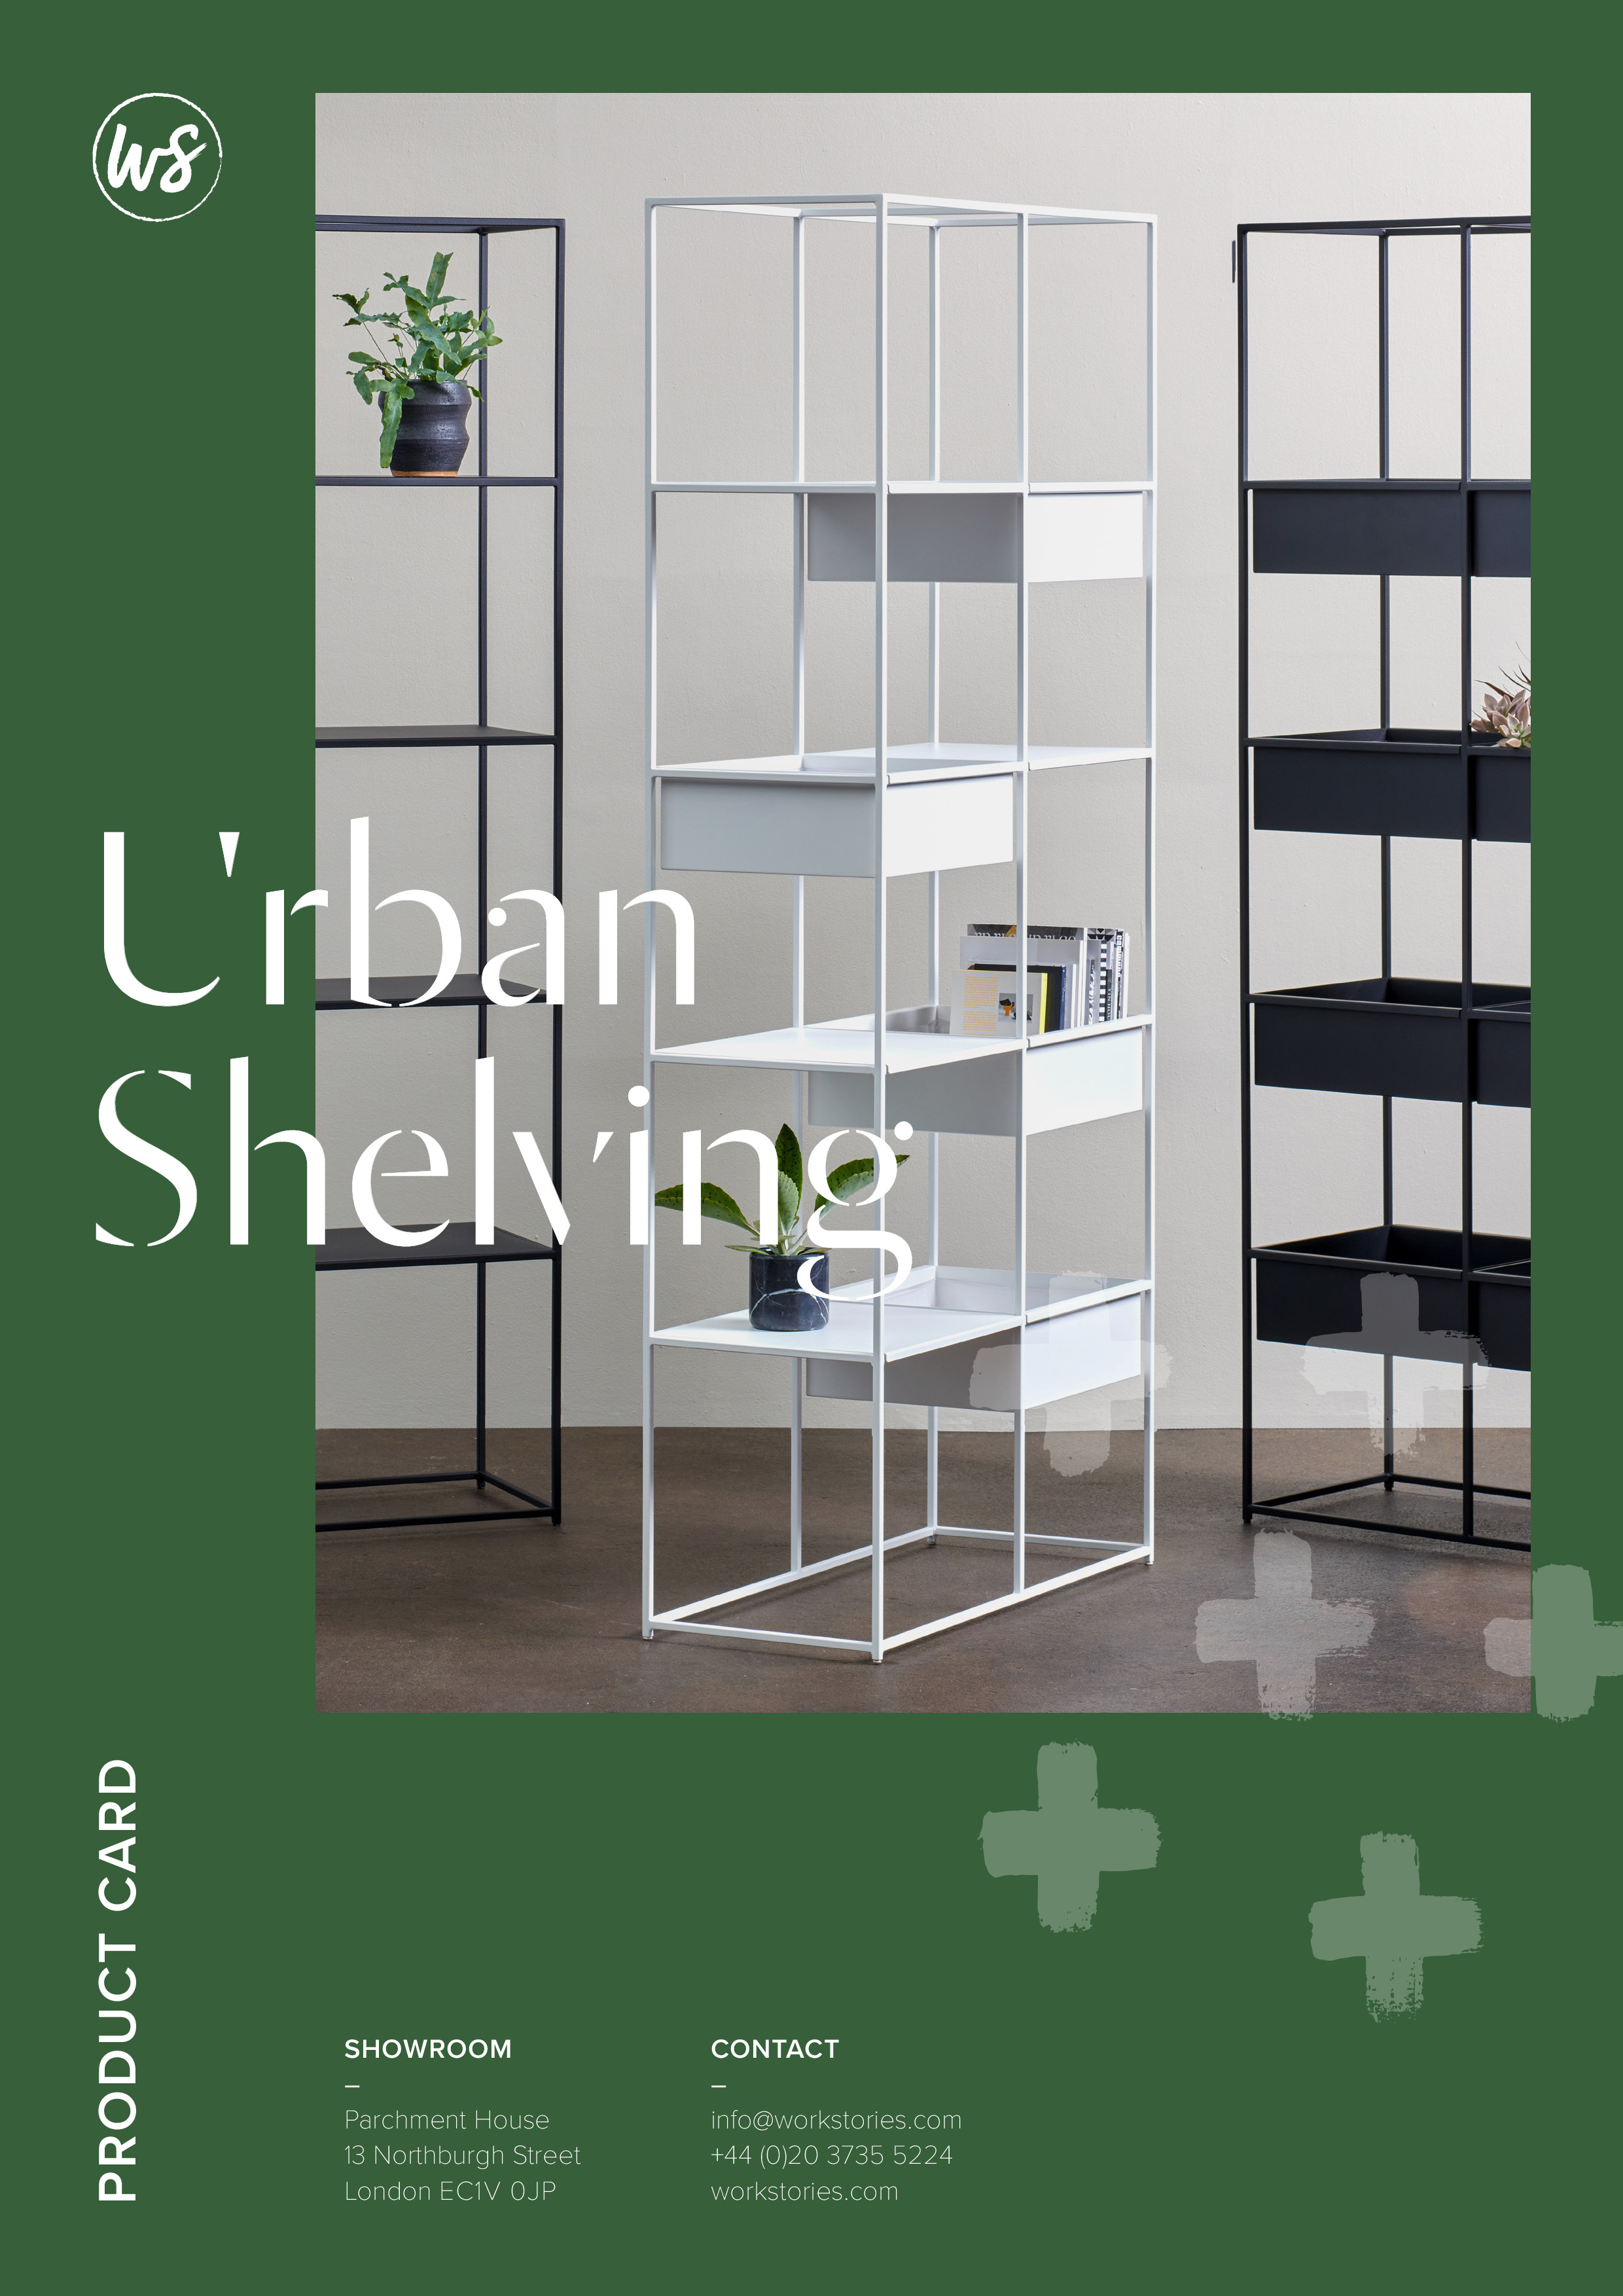 WS - Urban Shelving - Product card